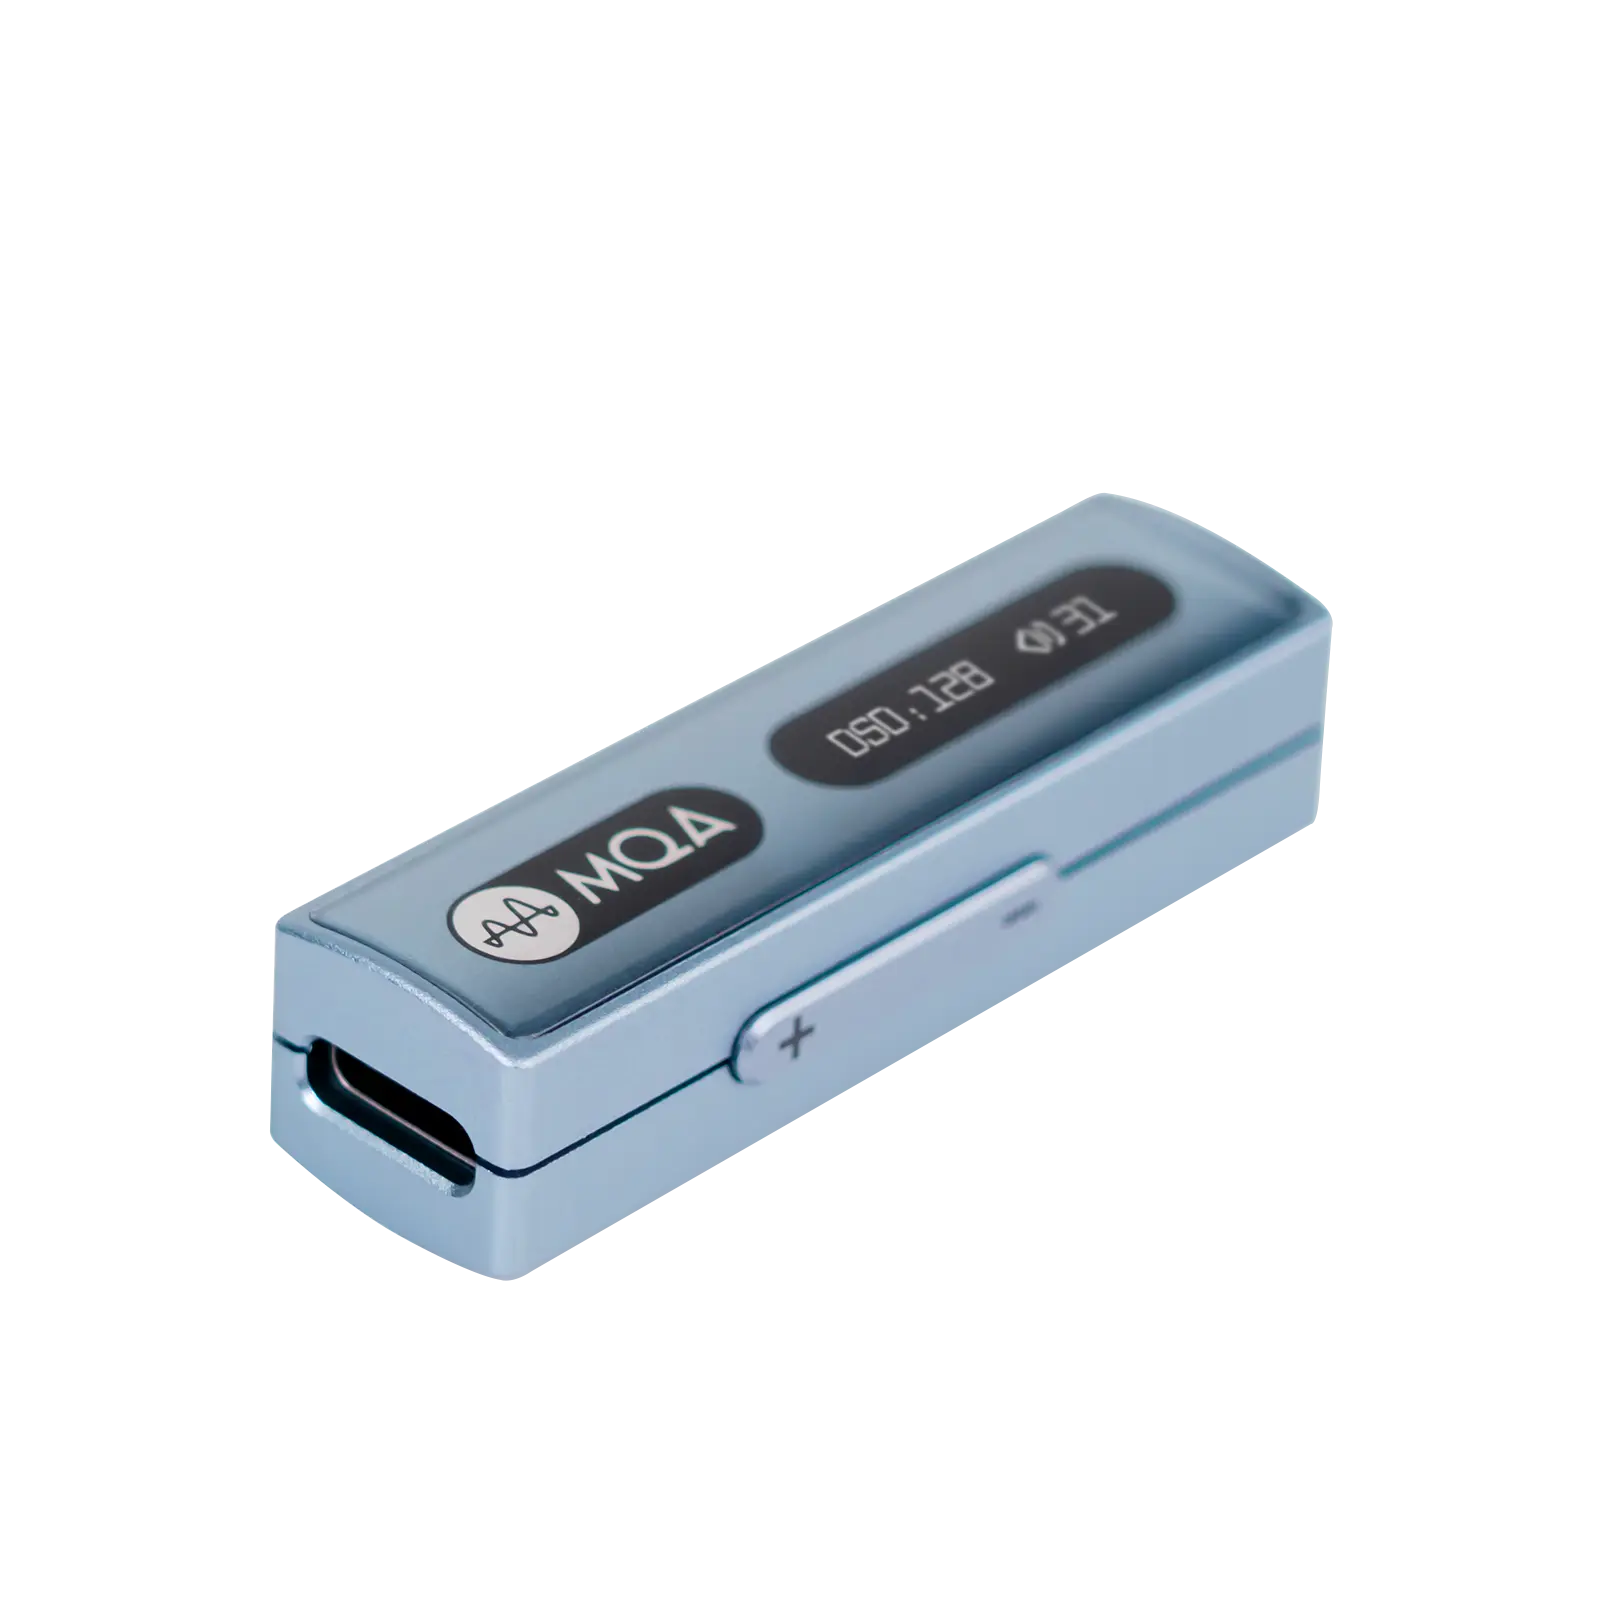 Hiby FC3 Portable MQA USB DAC Headphone Amplifier — HiFiGo